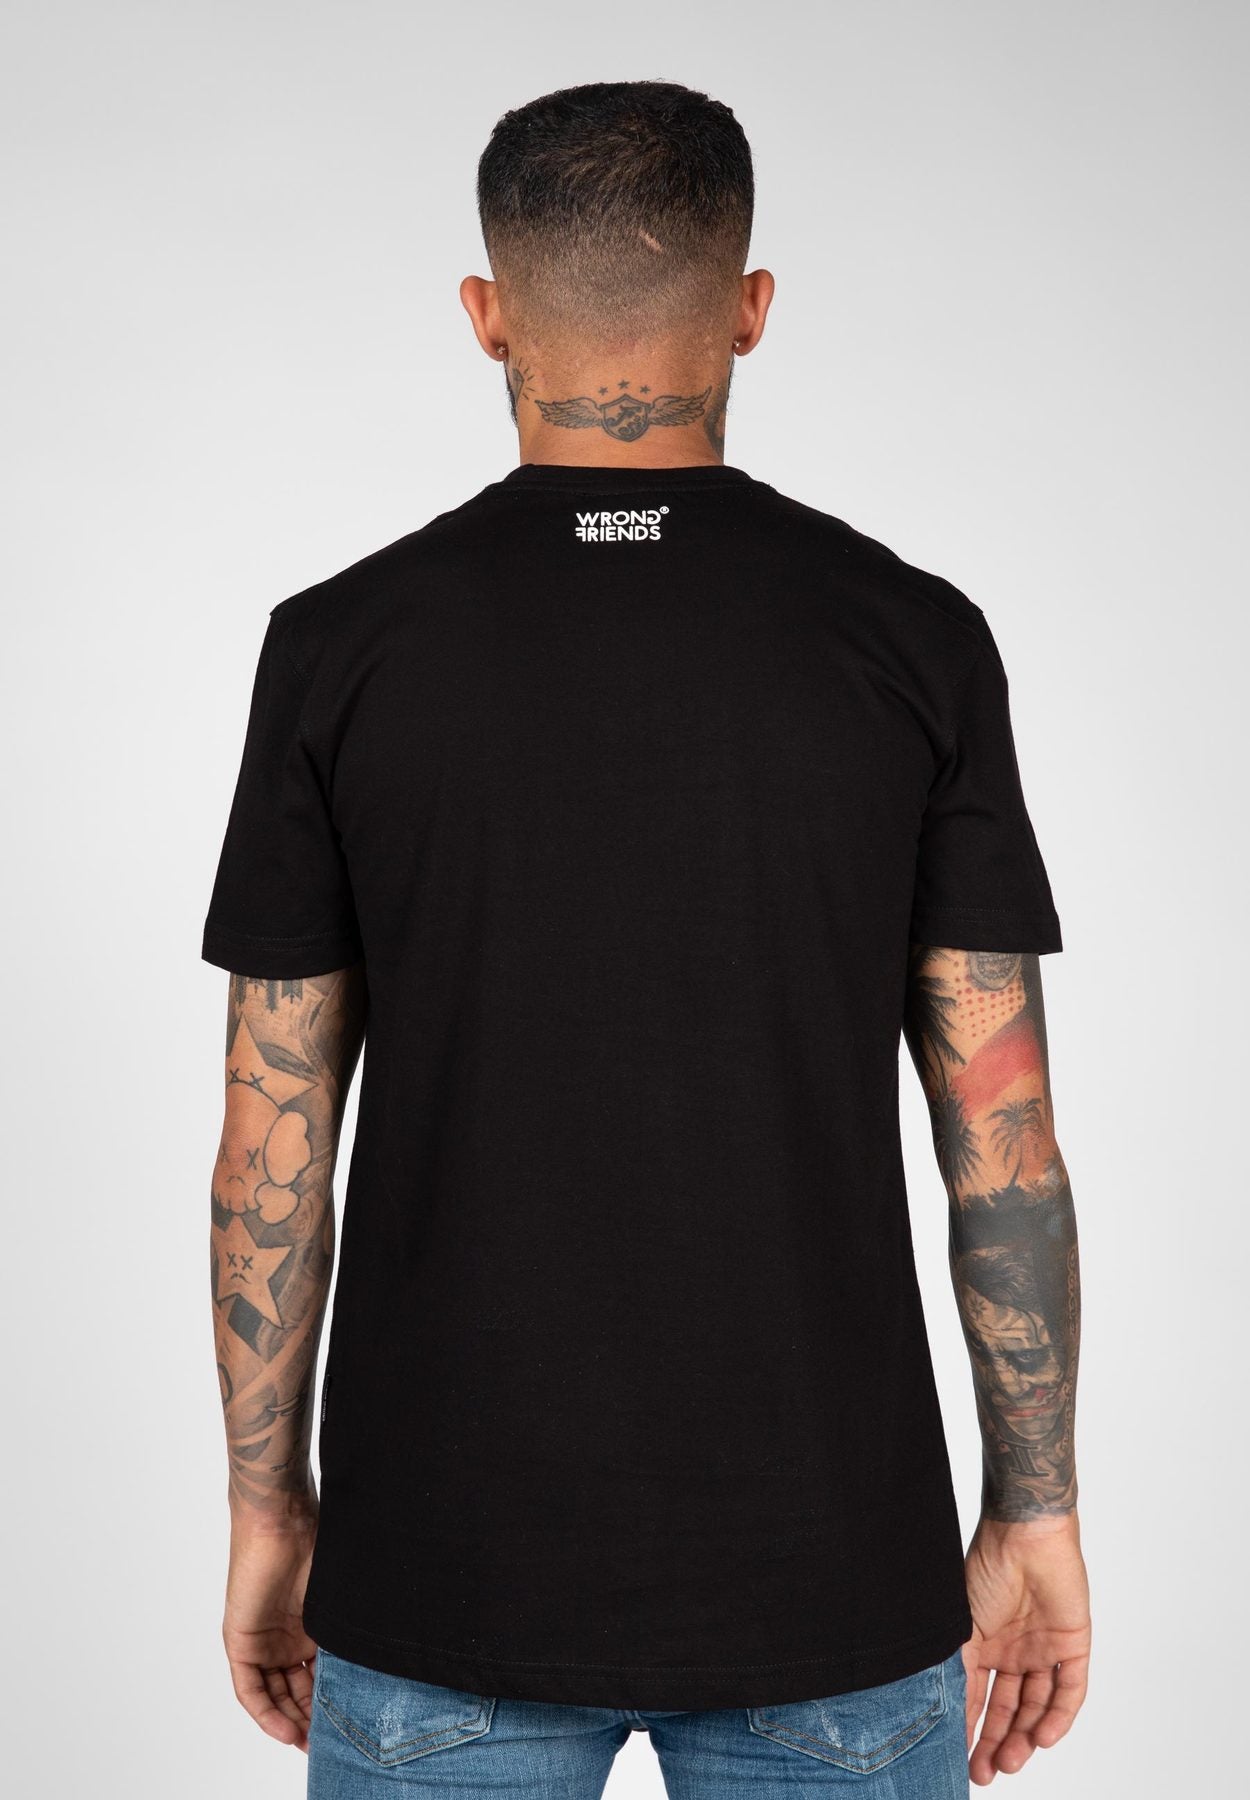 Fast Life t-shirt black